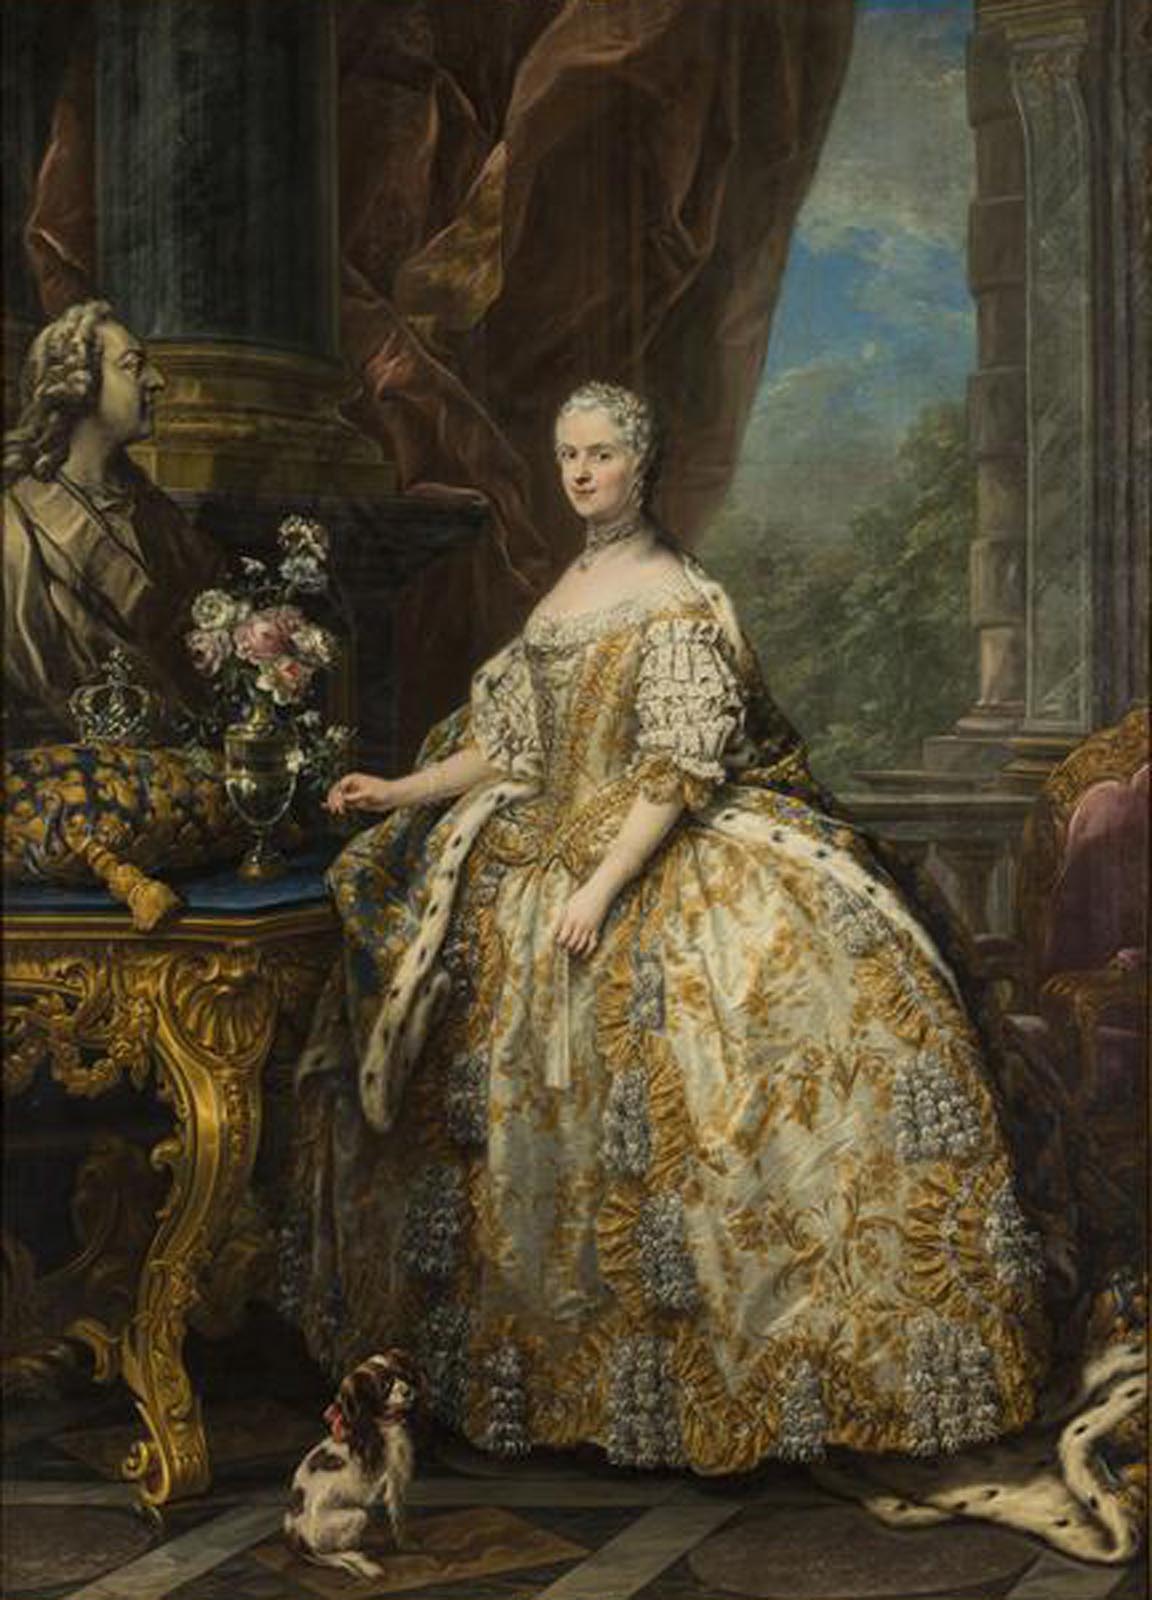 Représentation de la reine Marie Leszczynska debout en grande robe